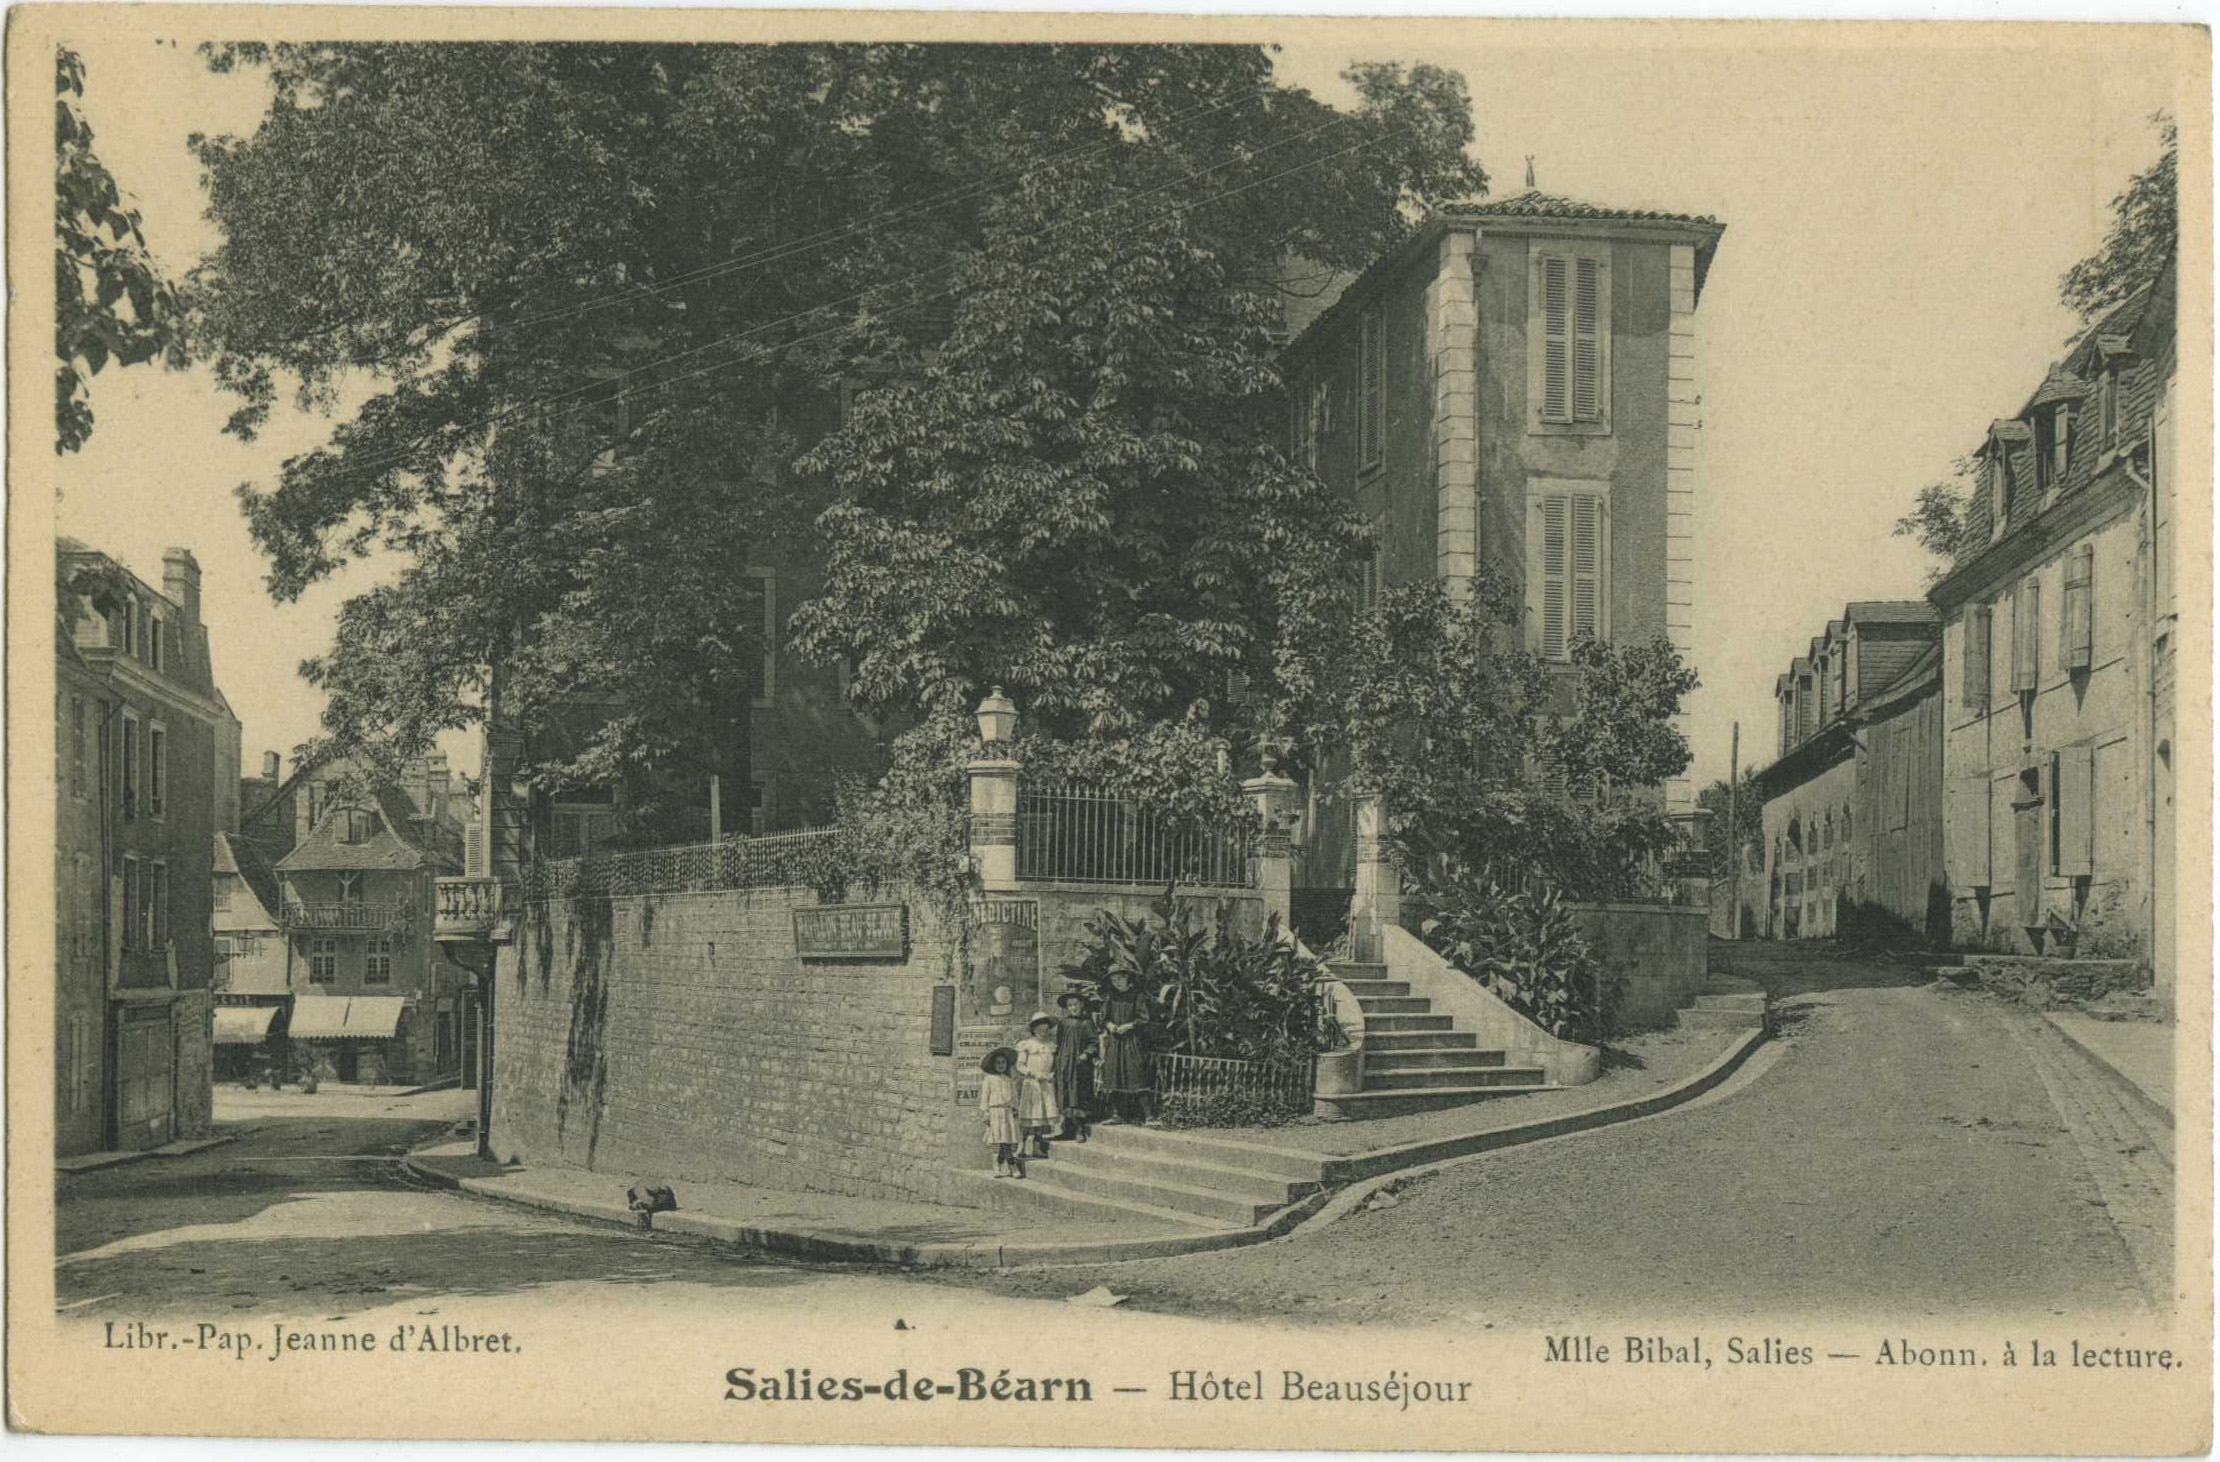 Salies-de-Béarn - Hôtel Beauséjour